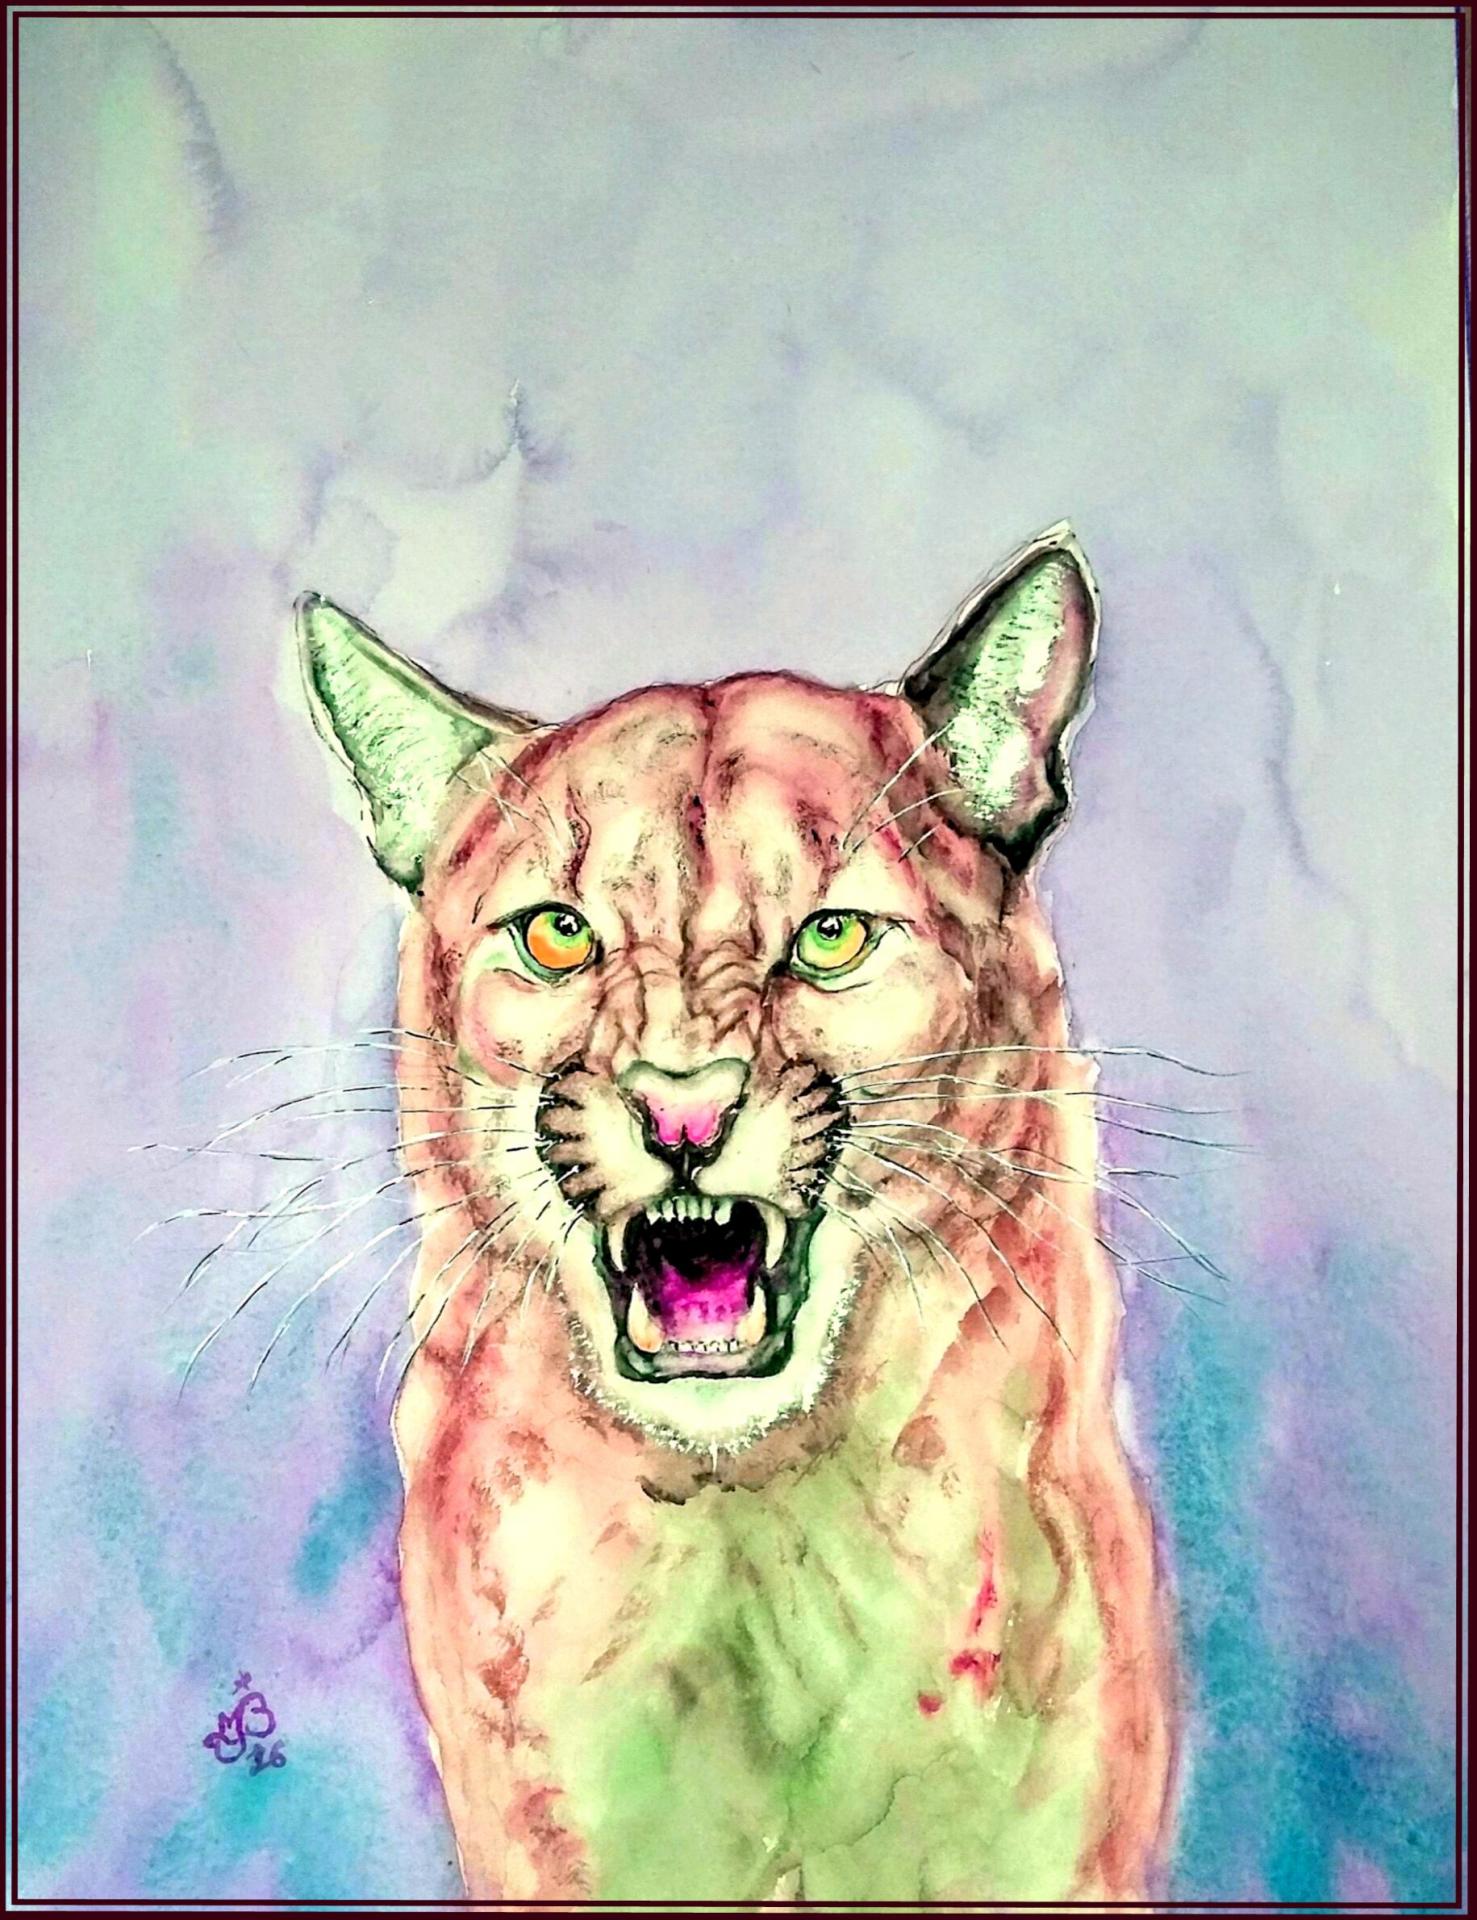 Puma portrait